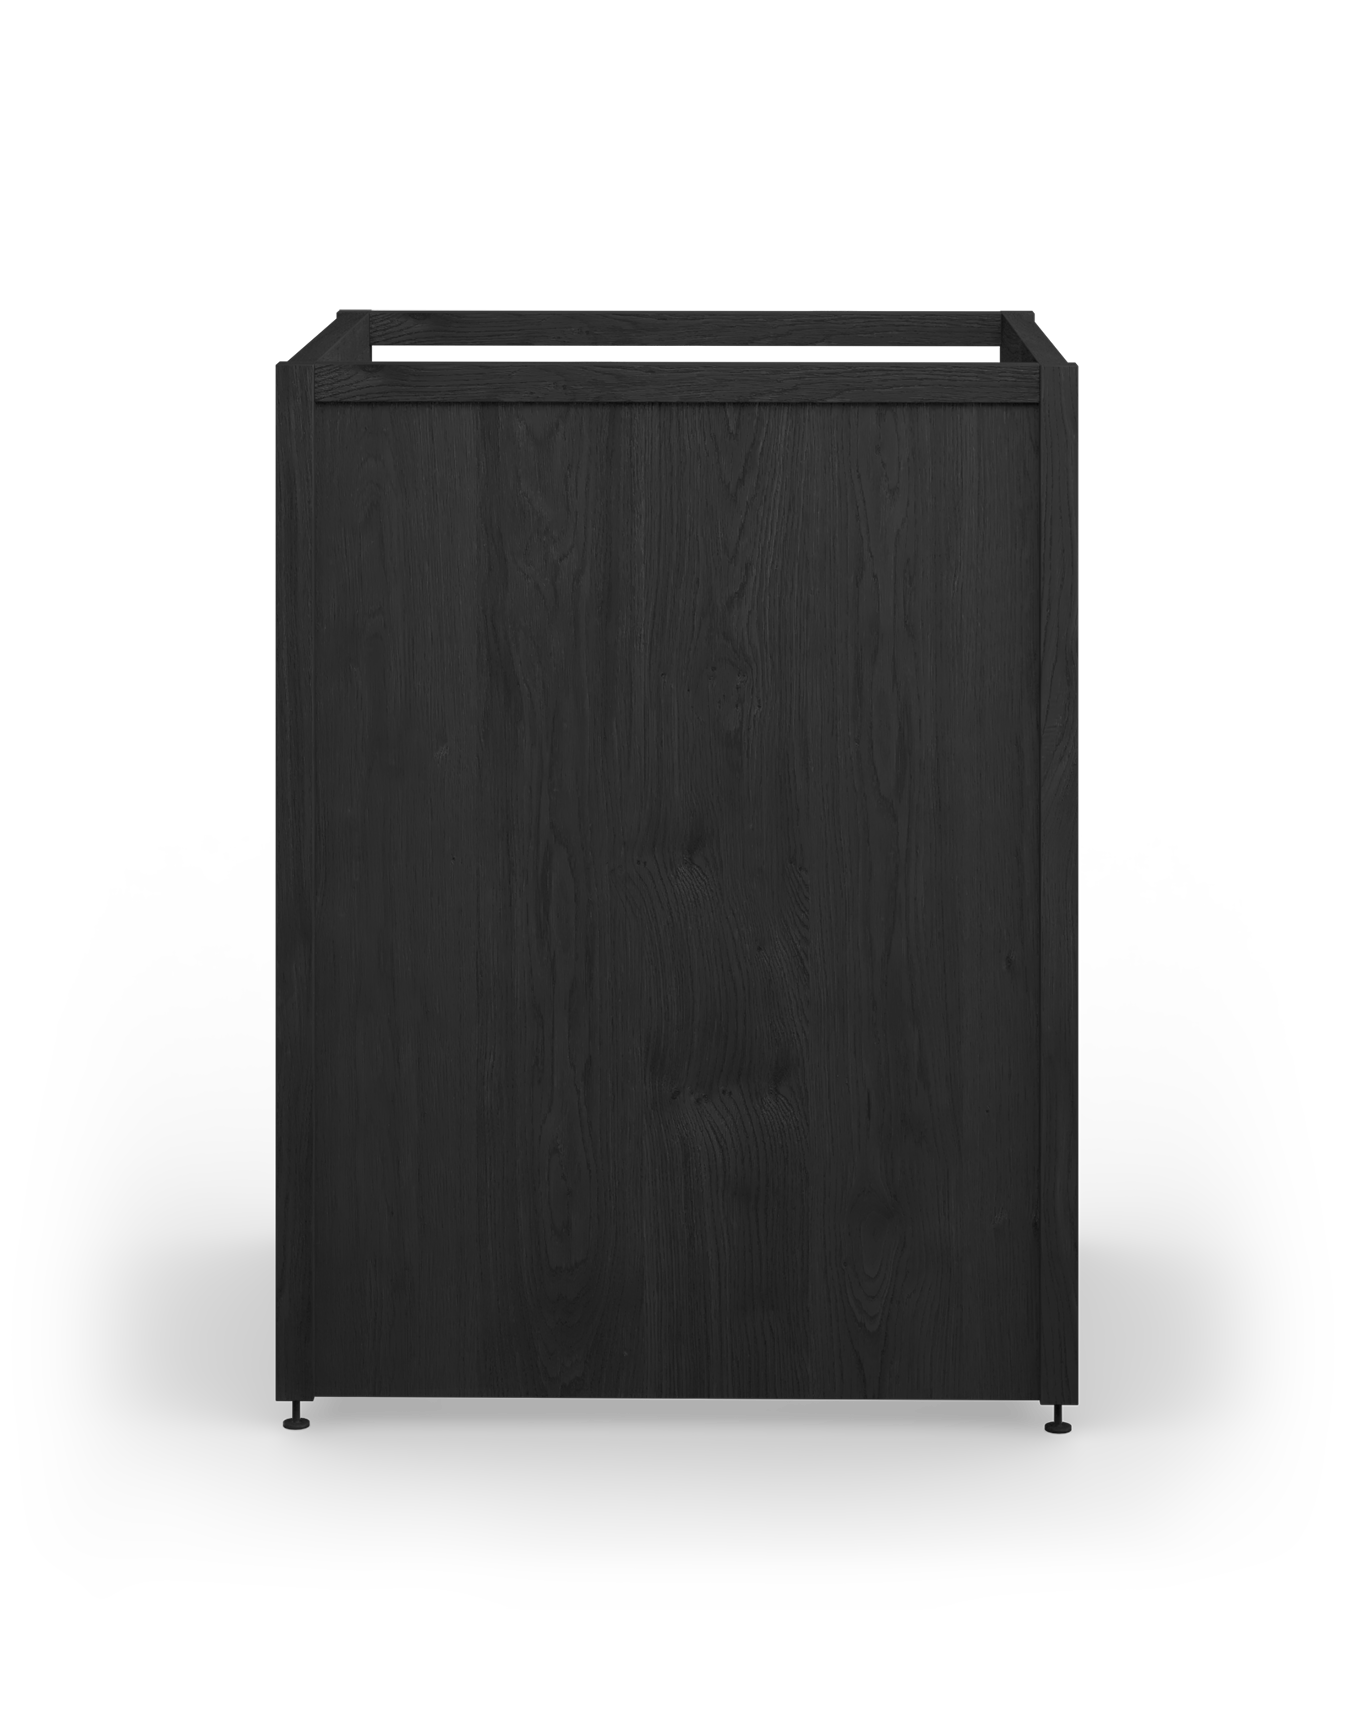 Coquo modular kitchen appliance kit in black stained oak. 